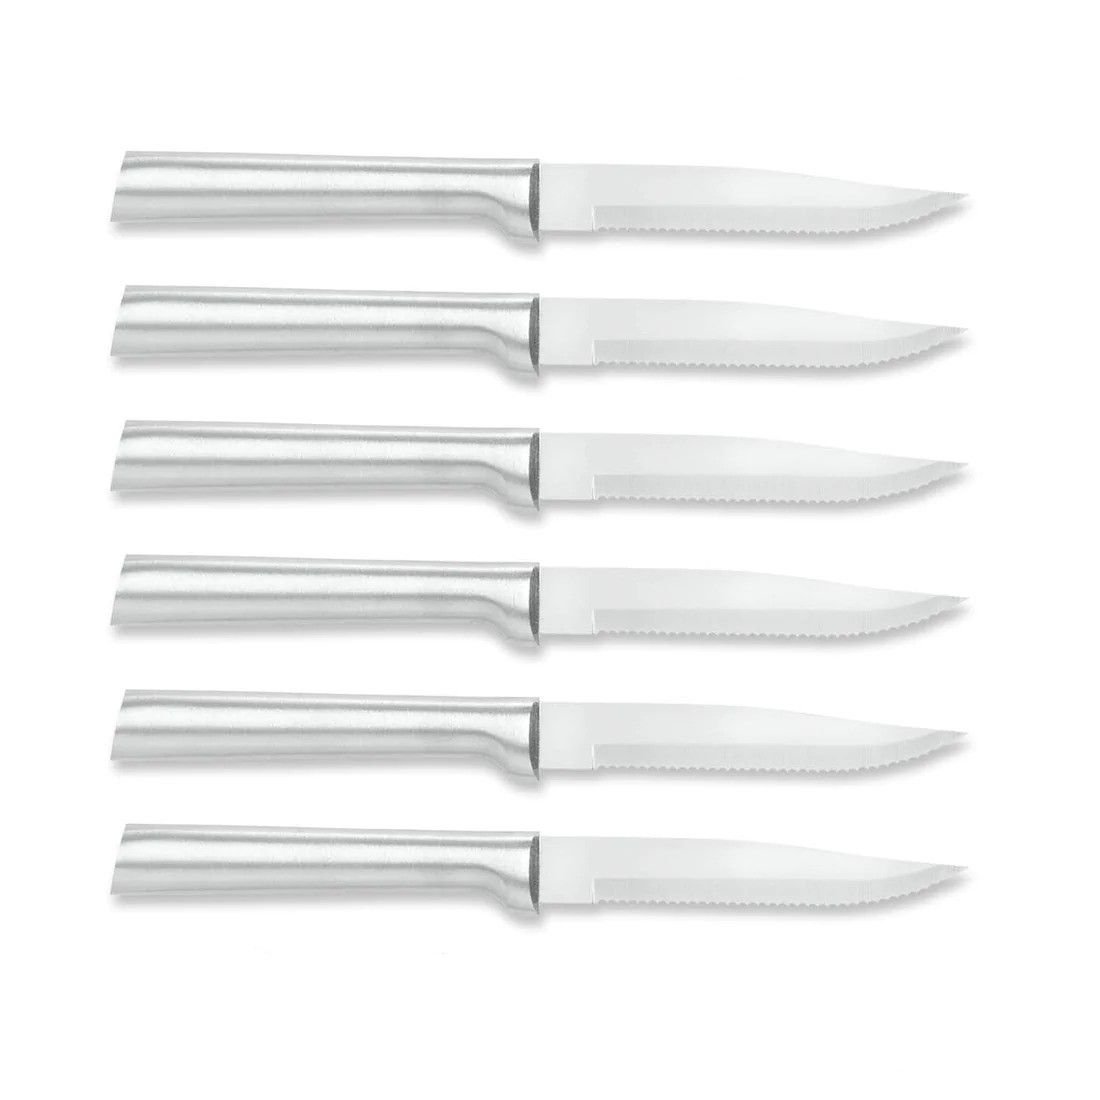 Rada Cutlery Knife Set Oak Knife Block 7 Stainless Steel Culinary Knives